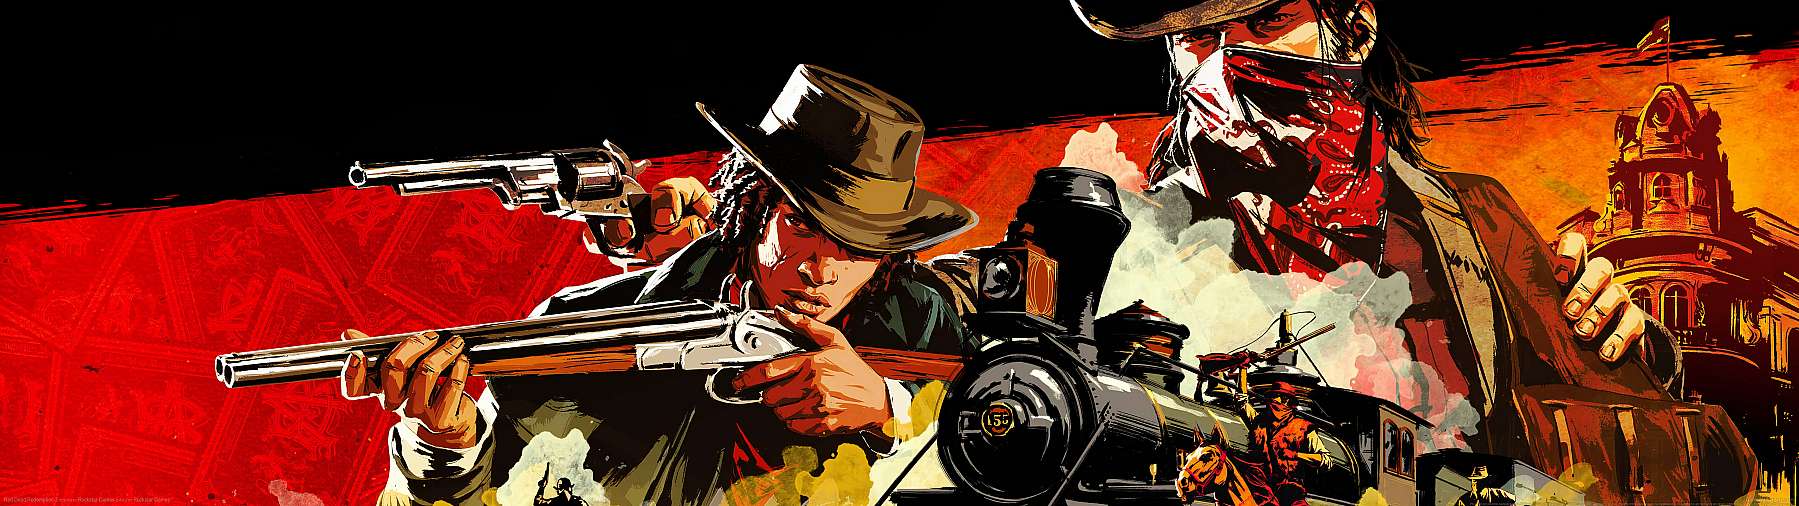 Red Dead Redemption 2 superwide wallpaper or background 08